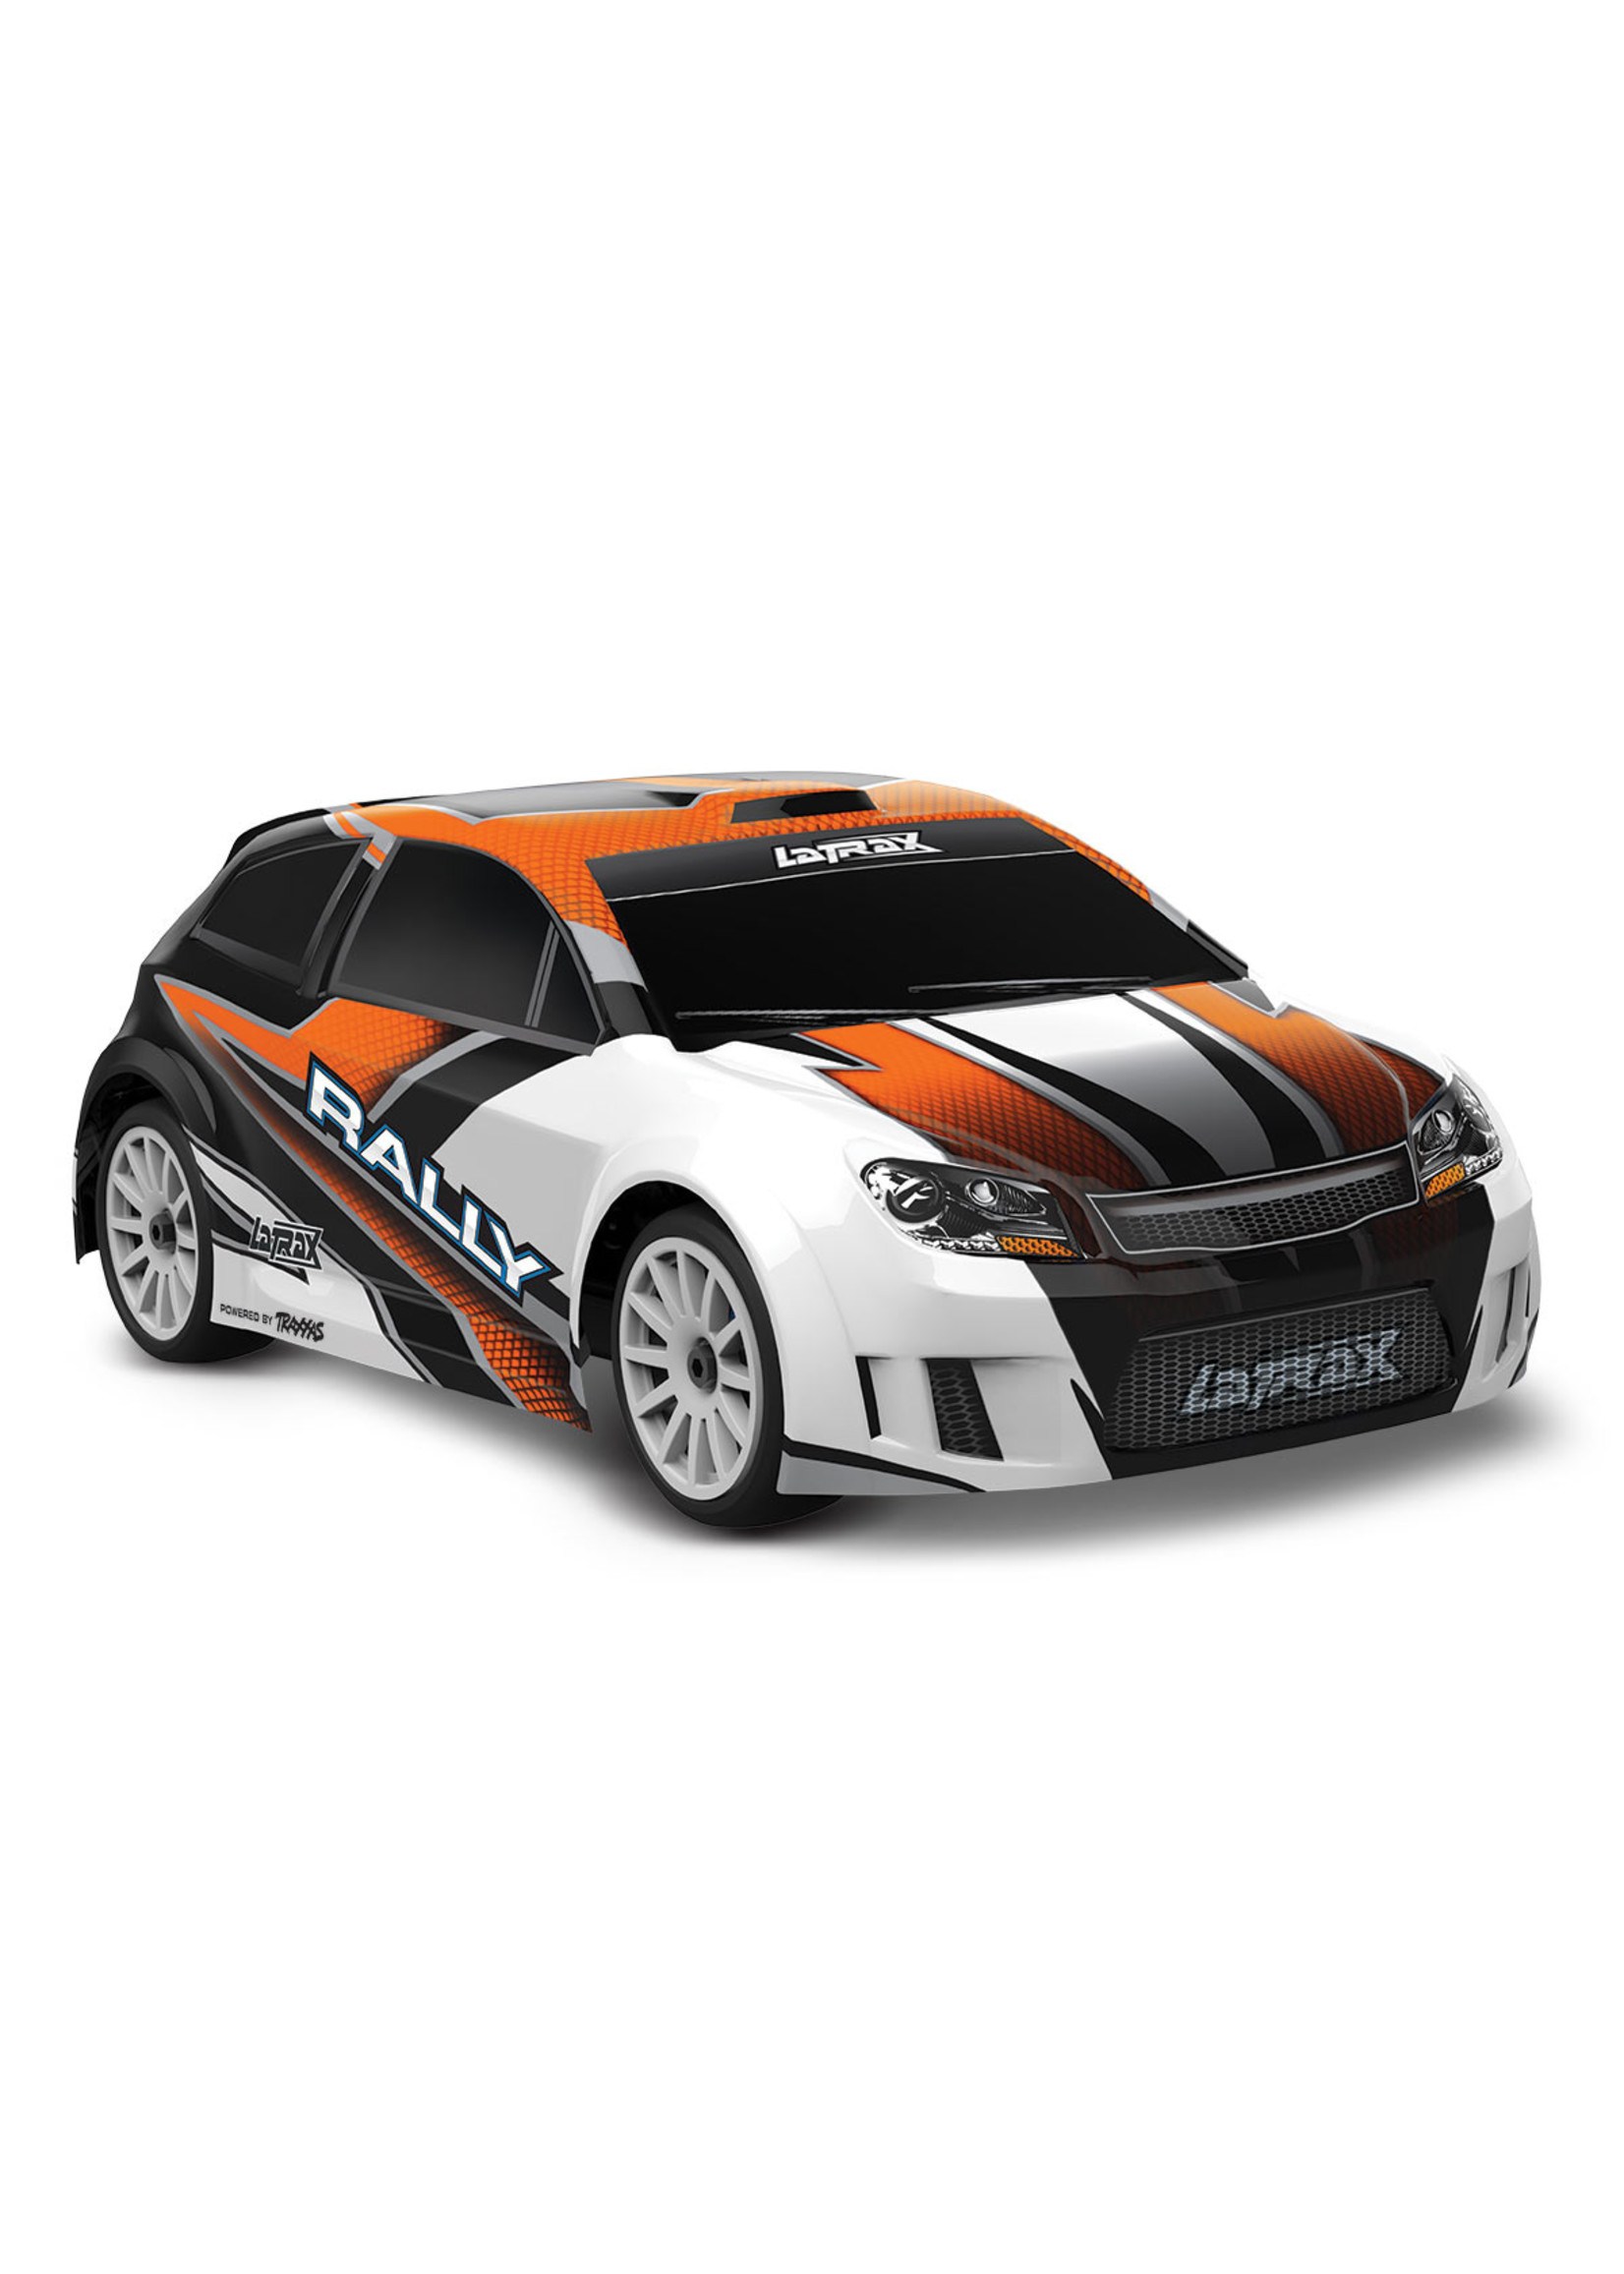 Traxxas 1/18 LaTrax 4WD RTR Rally Car - Orange